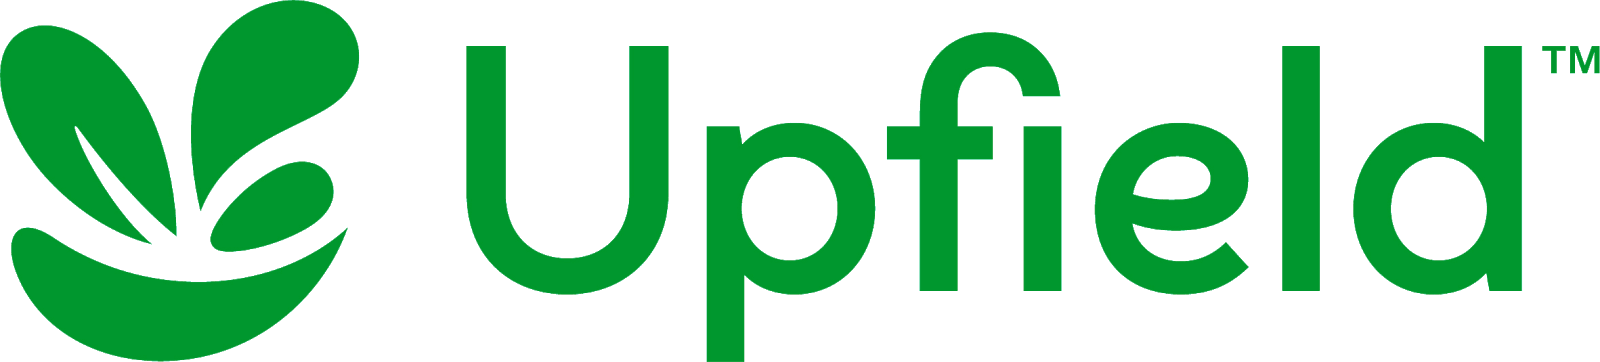 Upfield logo white